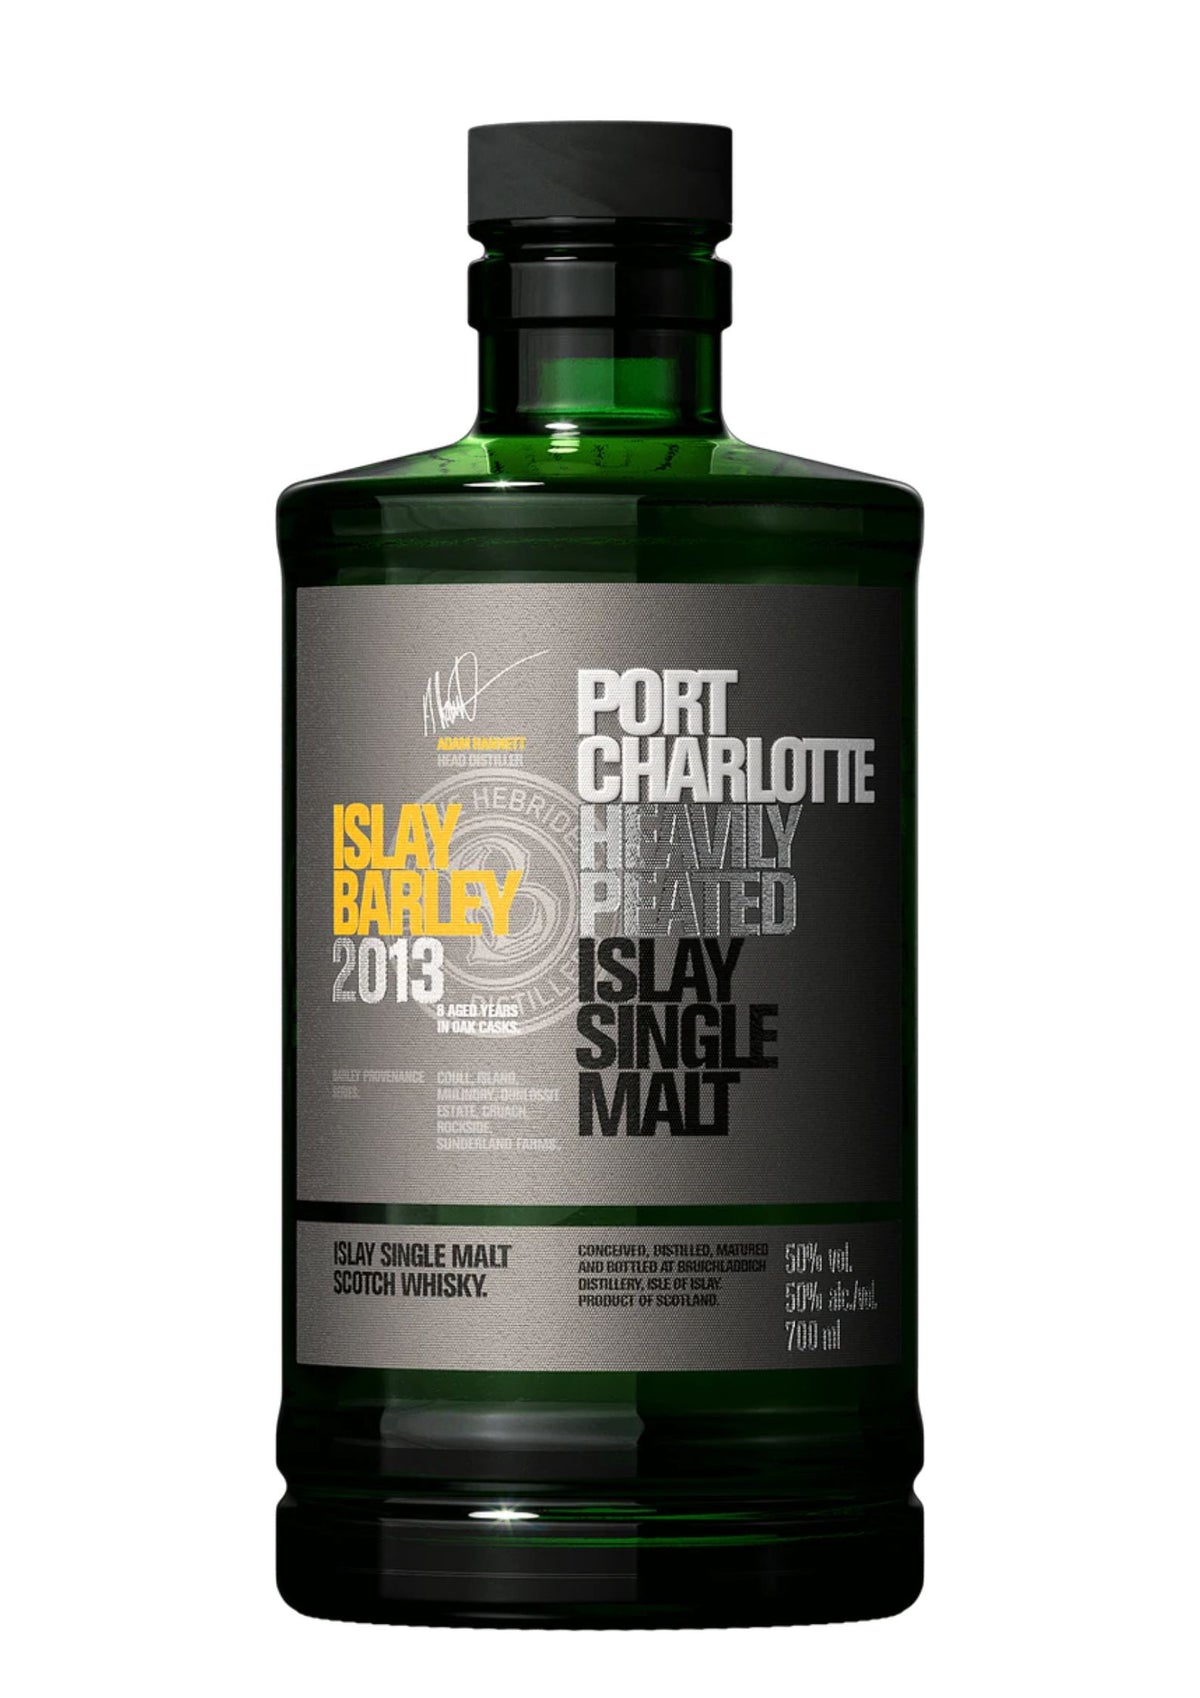 Port Charlotte Islay Barley 2013 Islay Single Malt Scotch Whisky, 50%